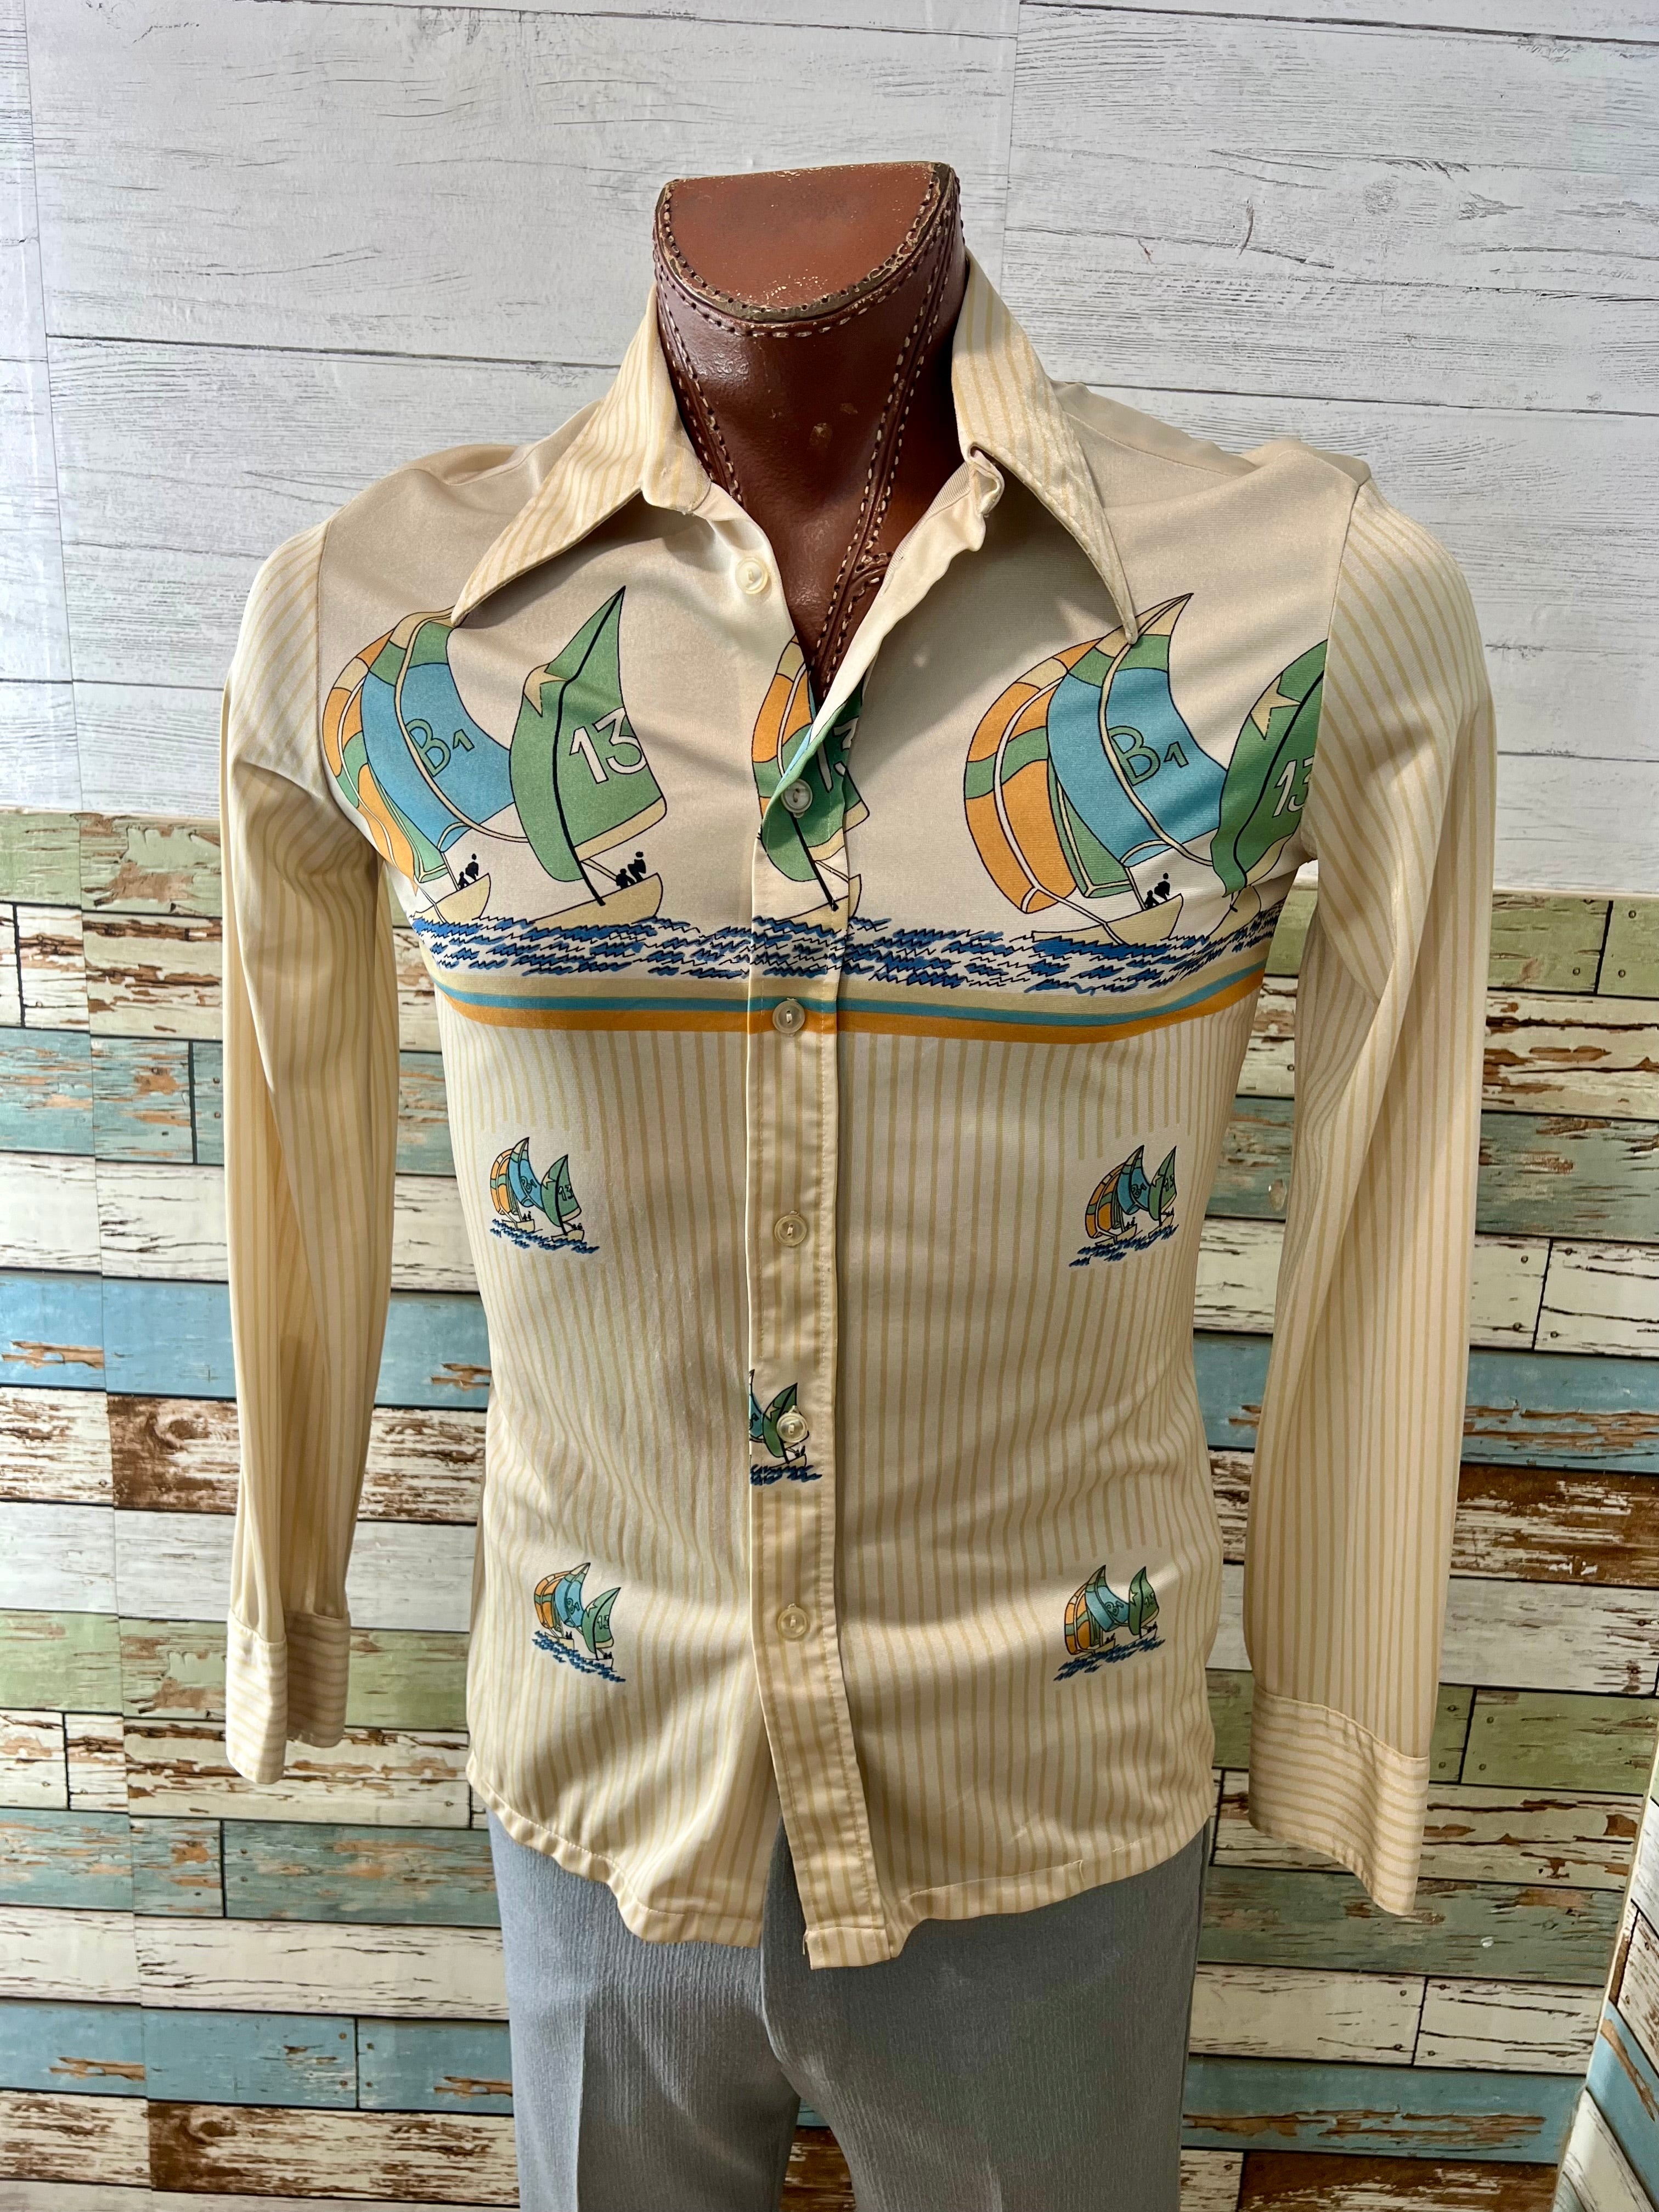 Nik-Nik 70's Disco Shirt Vintage - clothing & accessories - by